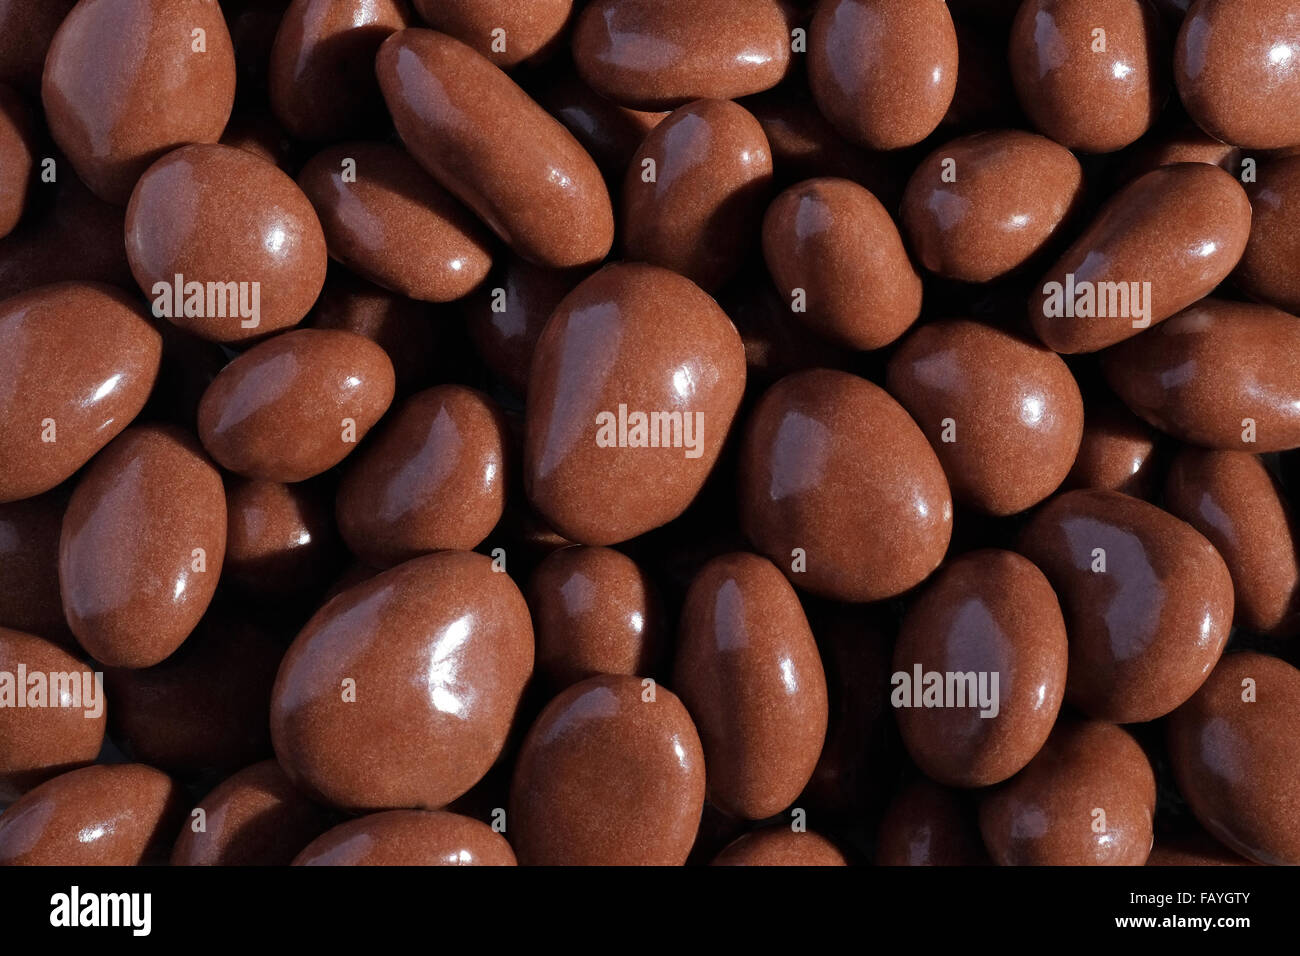 chocolate coated raisins Stock Photo